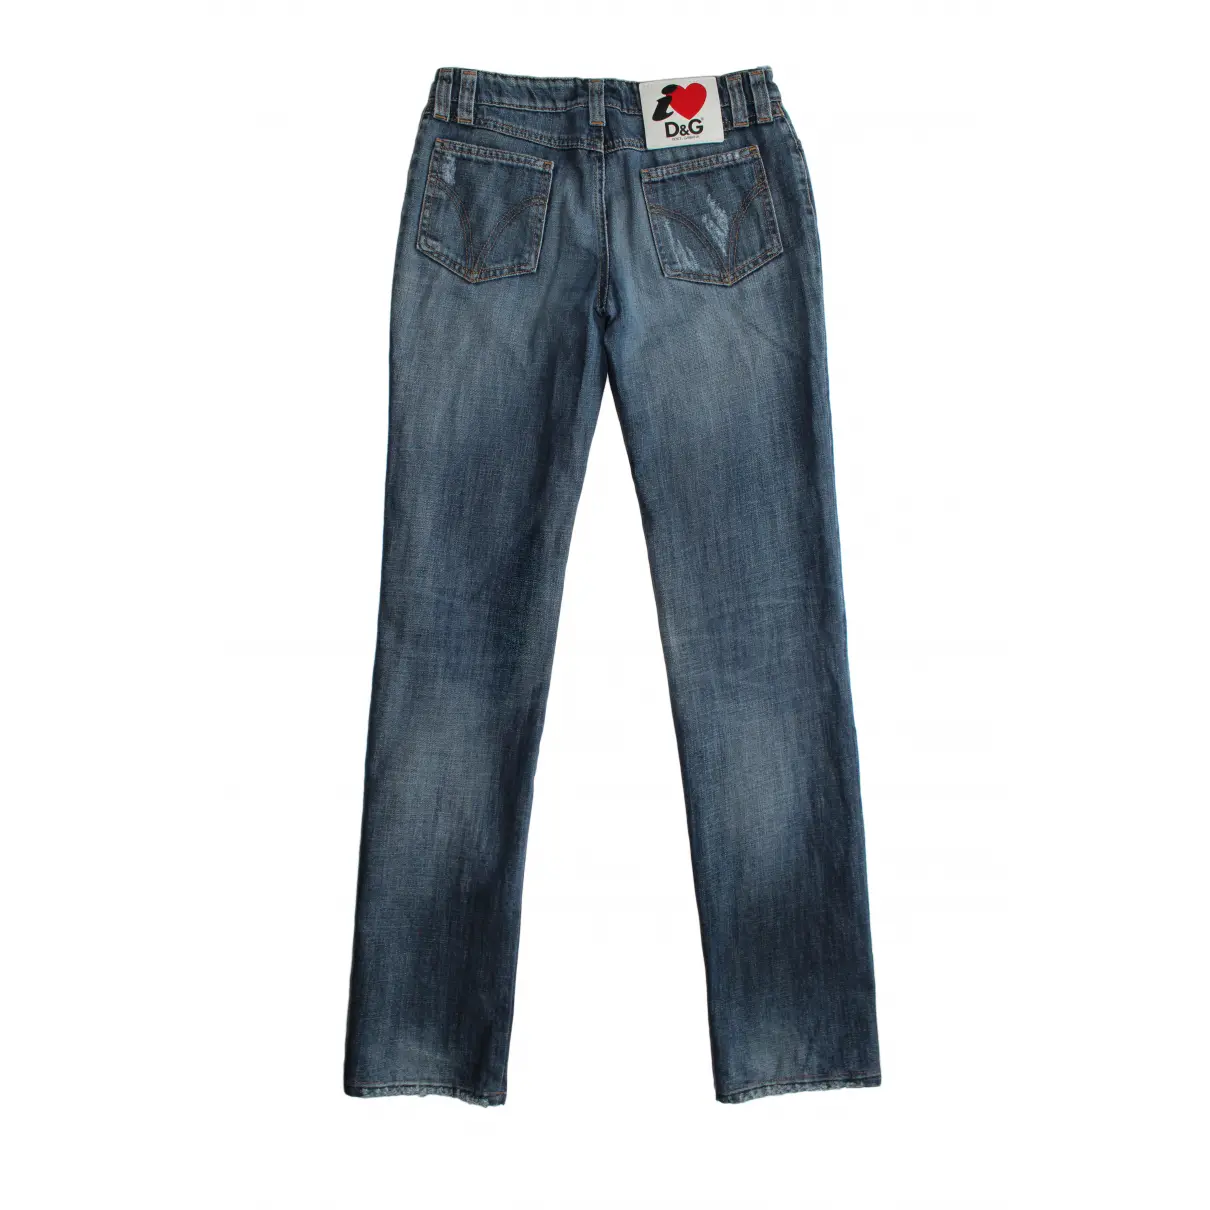 Buy D&G Bootcut jeans online